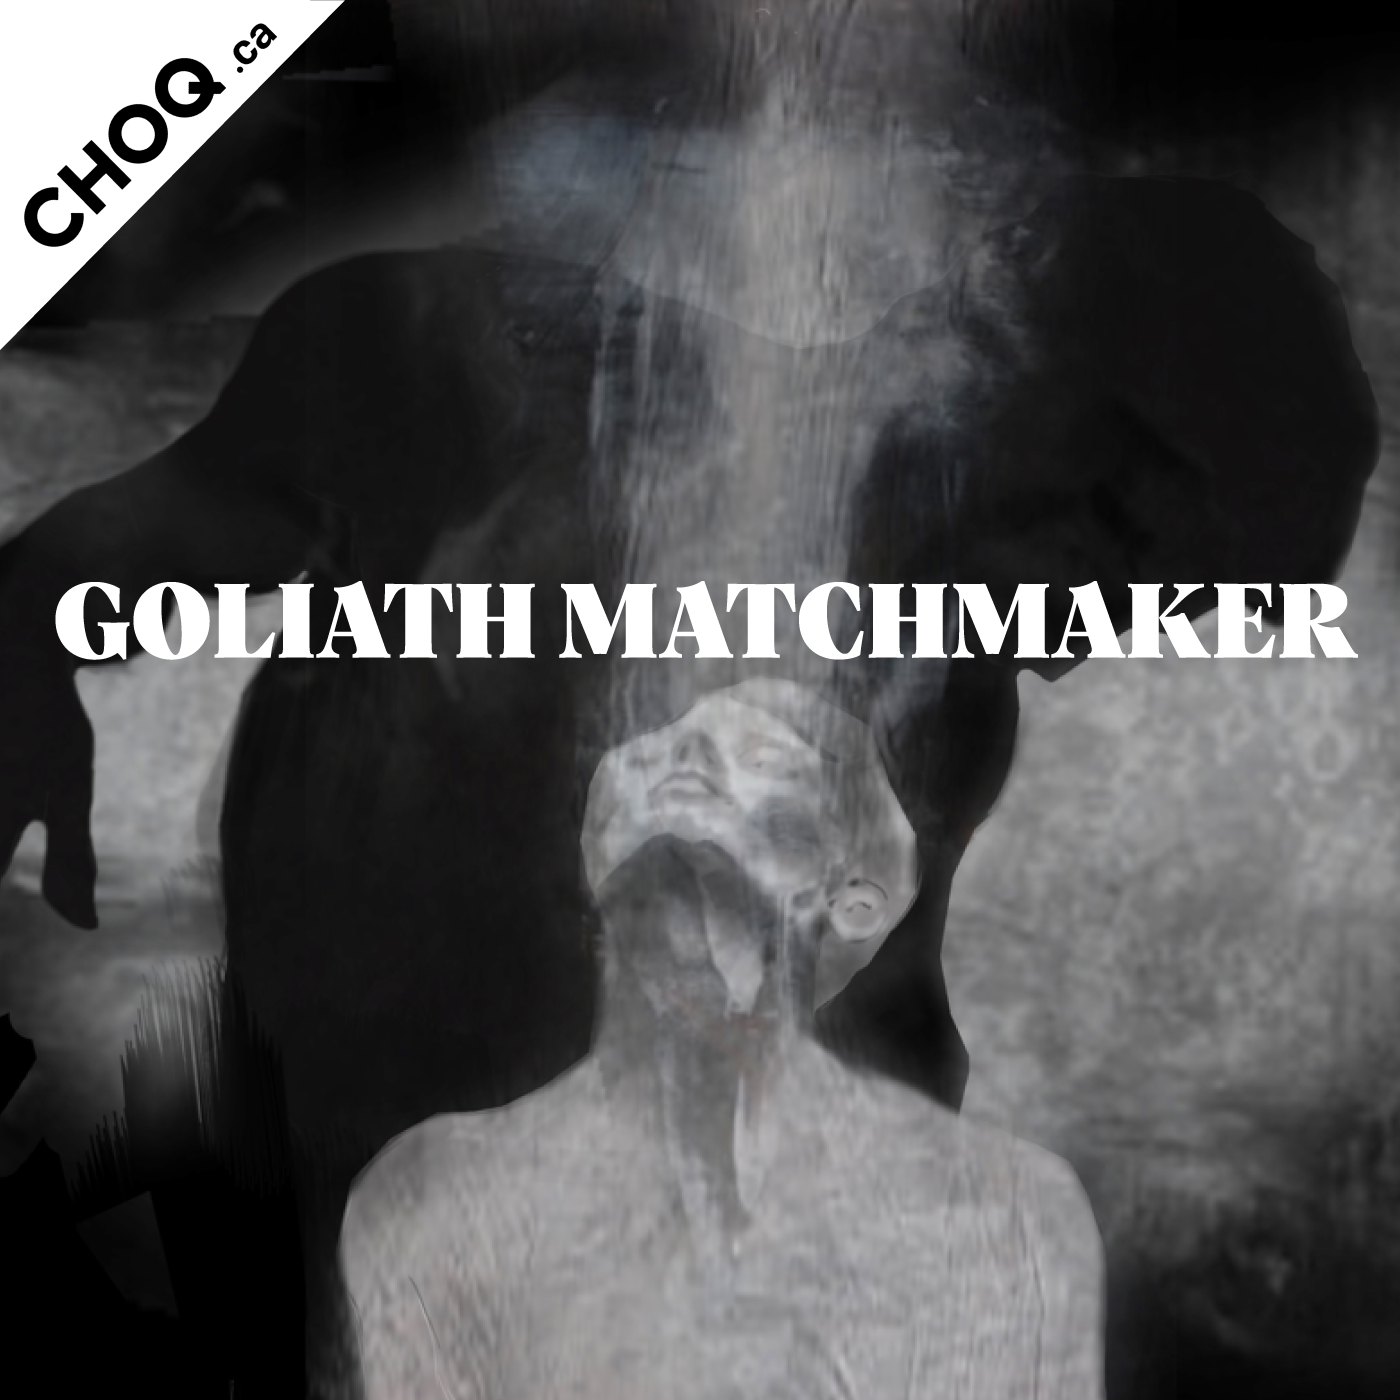 Goliath matchmaker